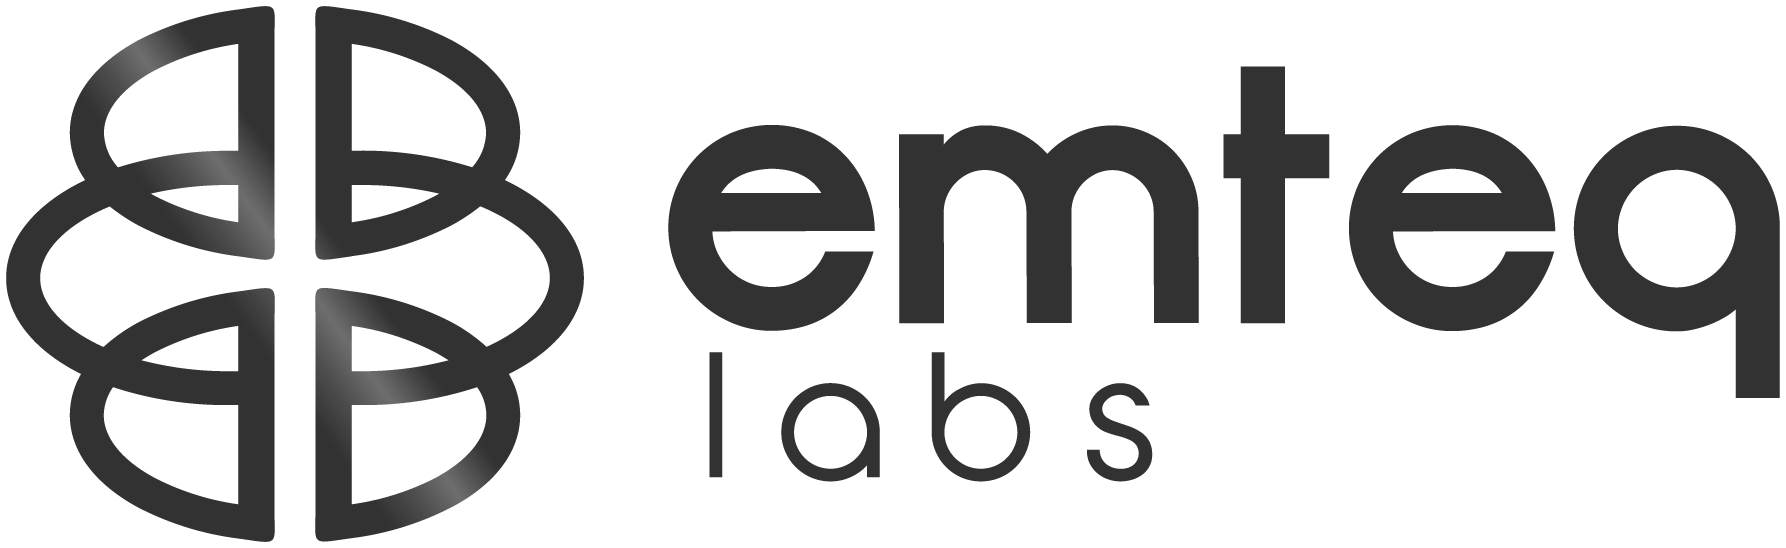 Emteq Labs logo